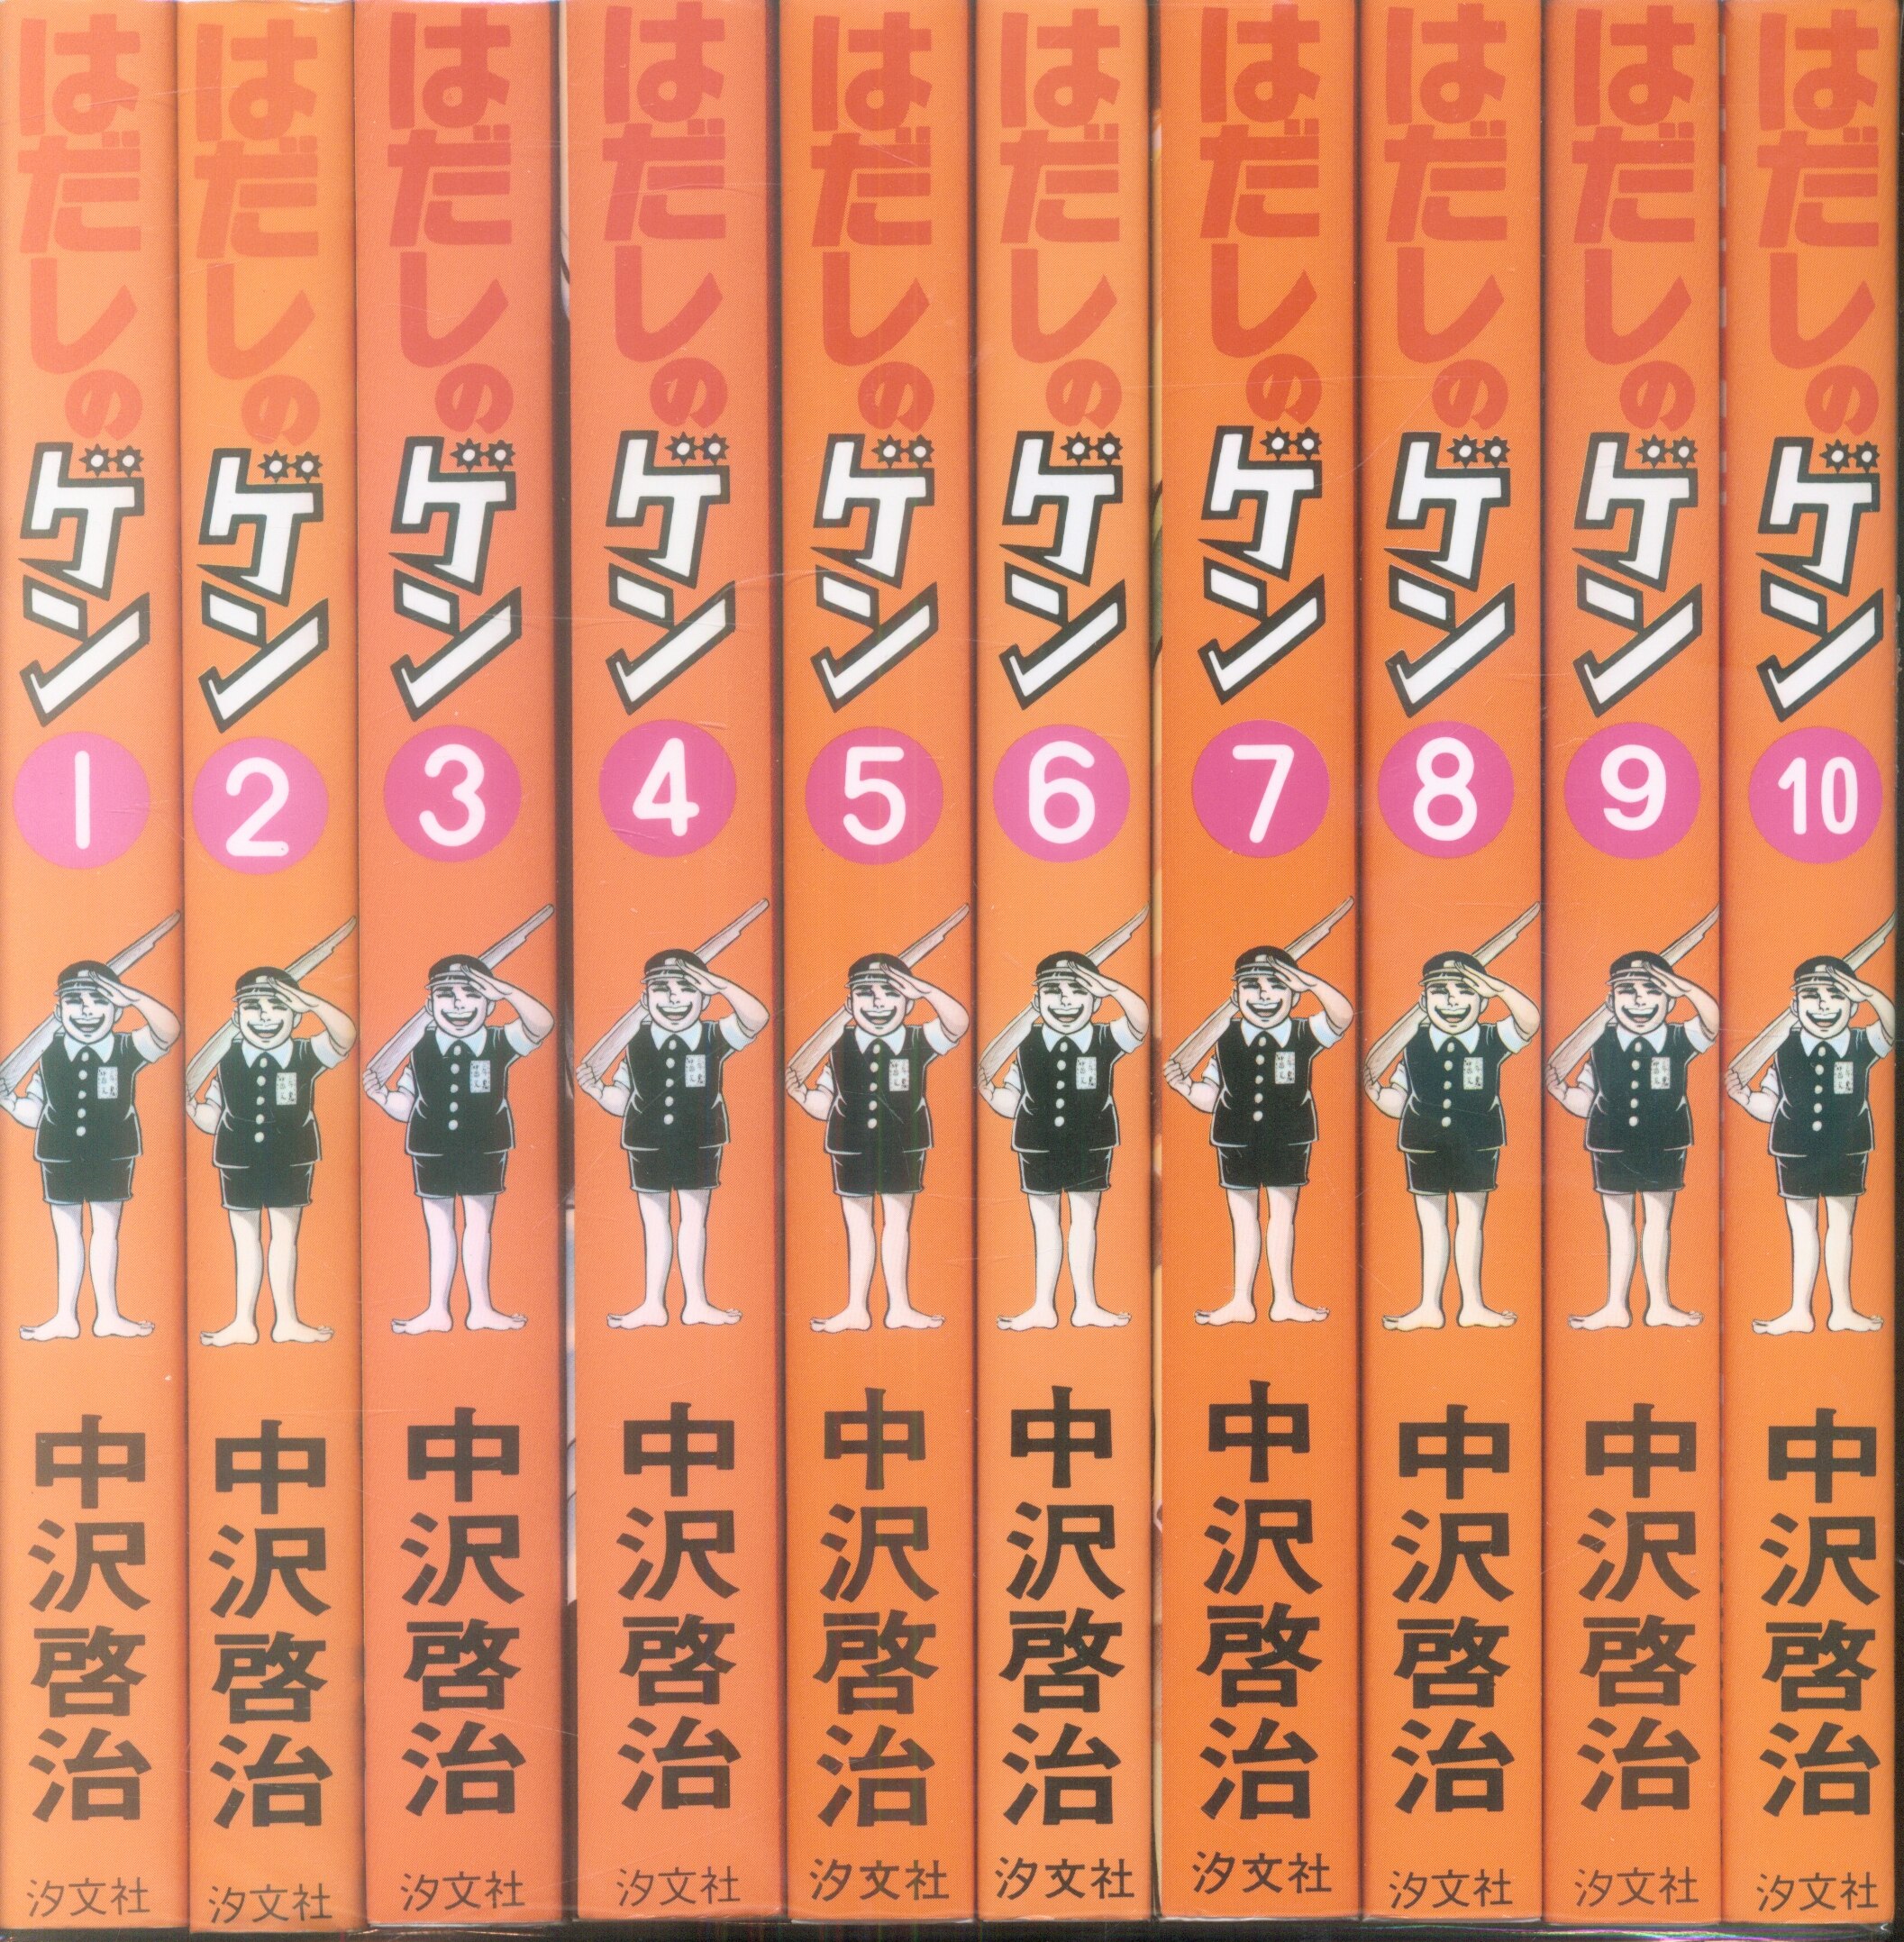 Chobunsha Jidou Bungaku Edition Keiji Nakazawa Barefoot Gen Complete